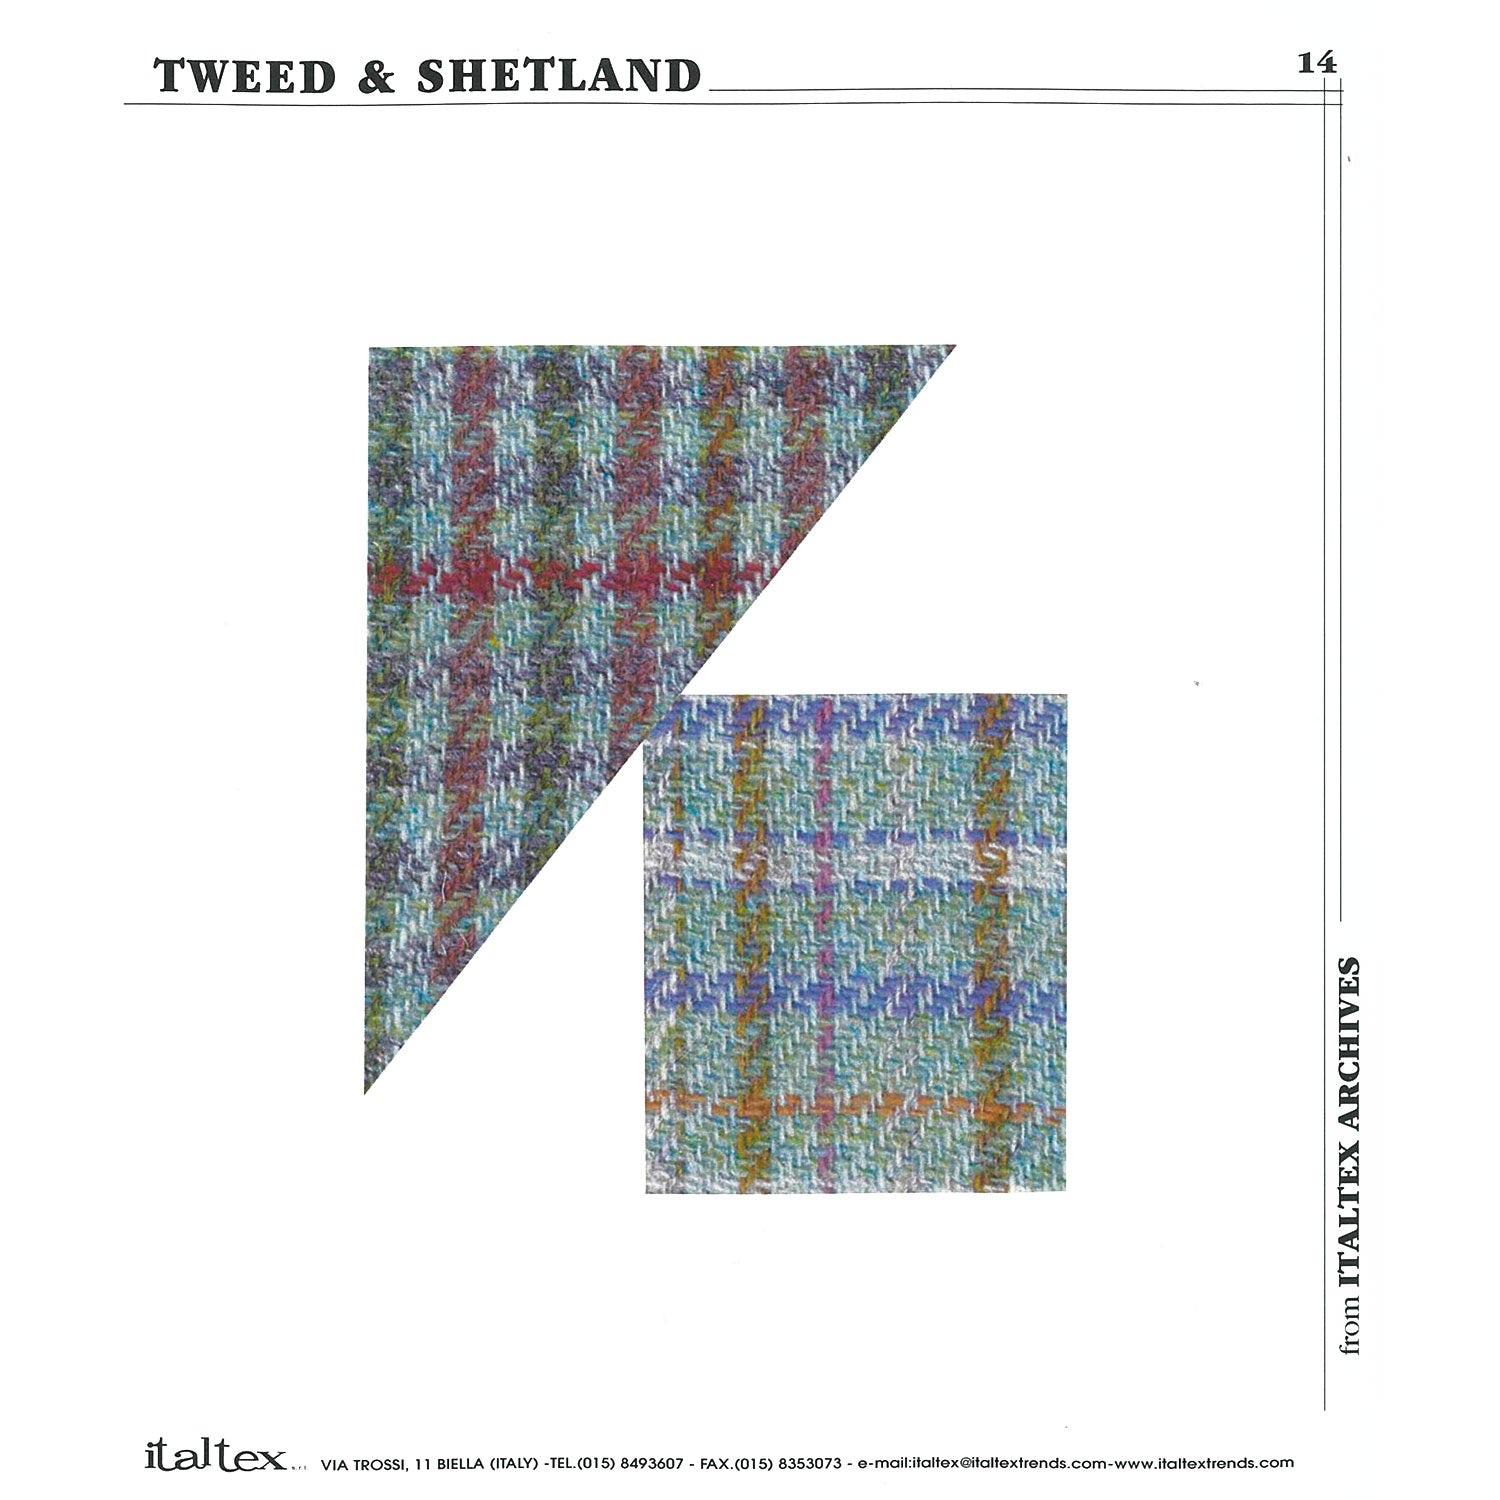 Tweed and Shetland Vol. 1